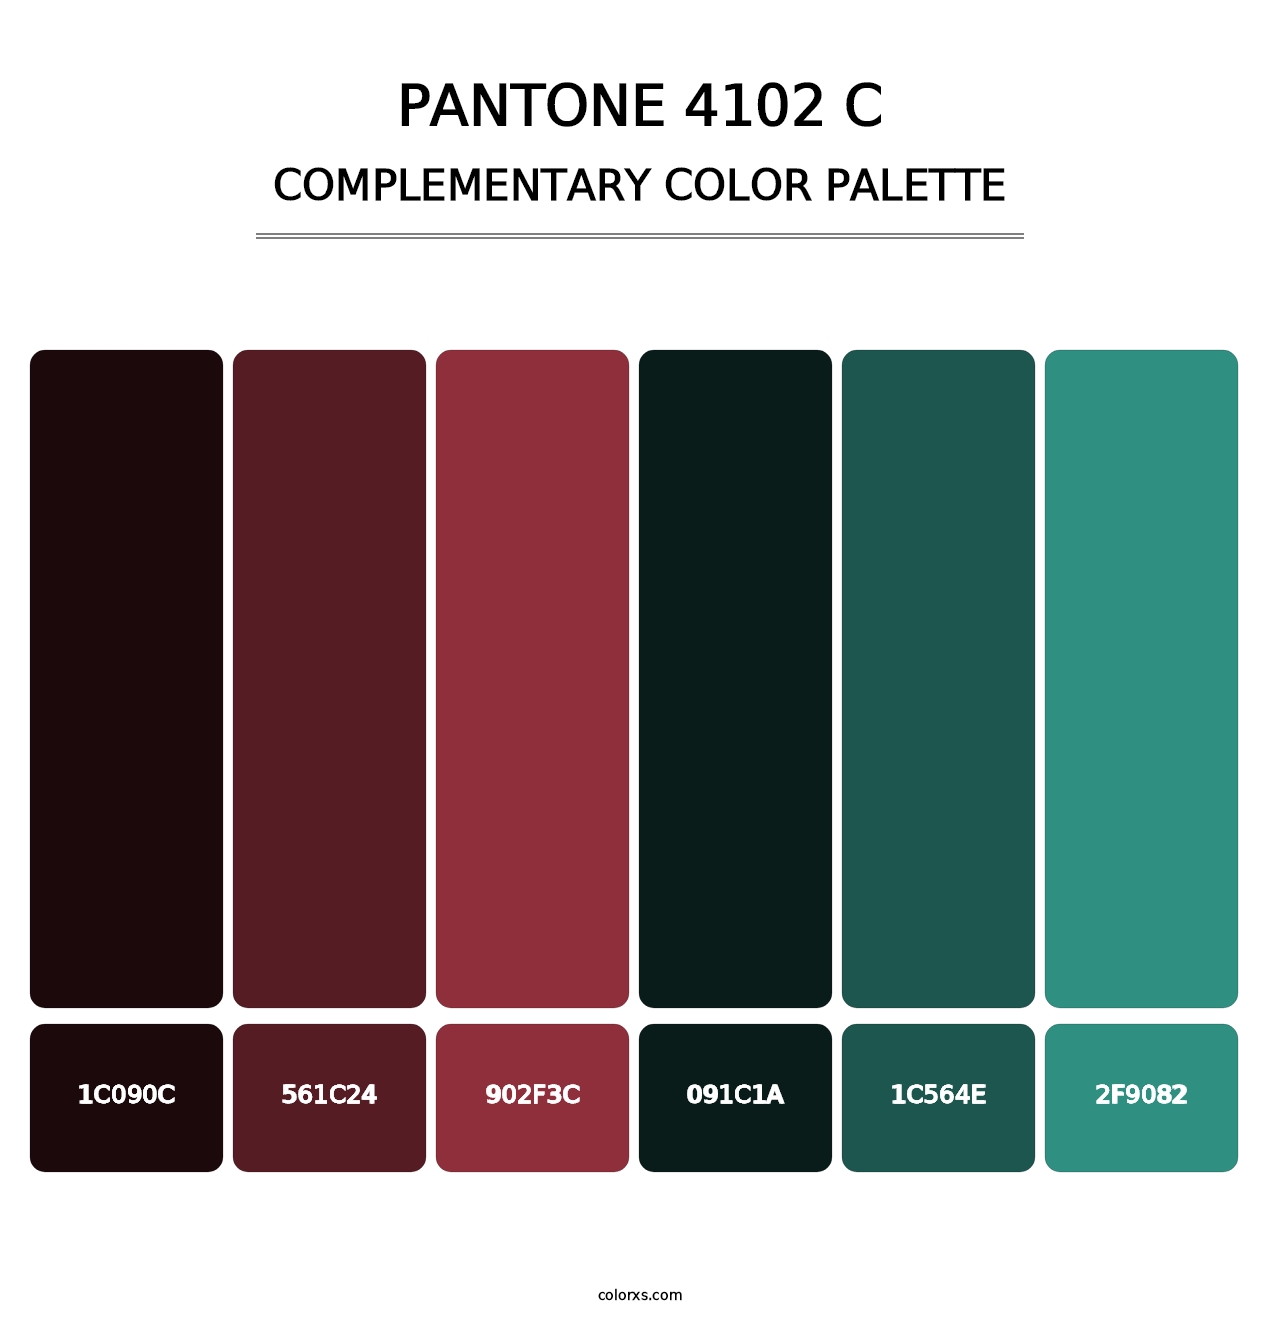 PANTONE 4102 C - Complementary Color Palette